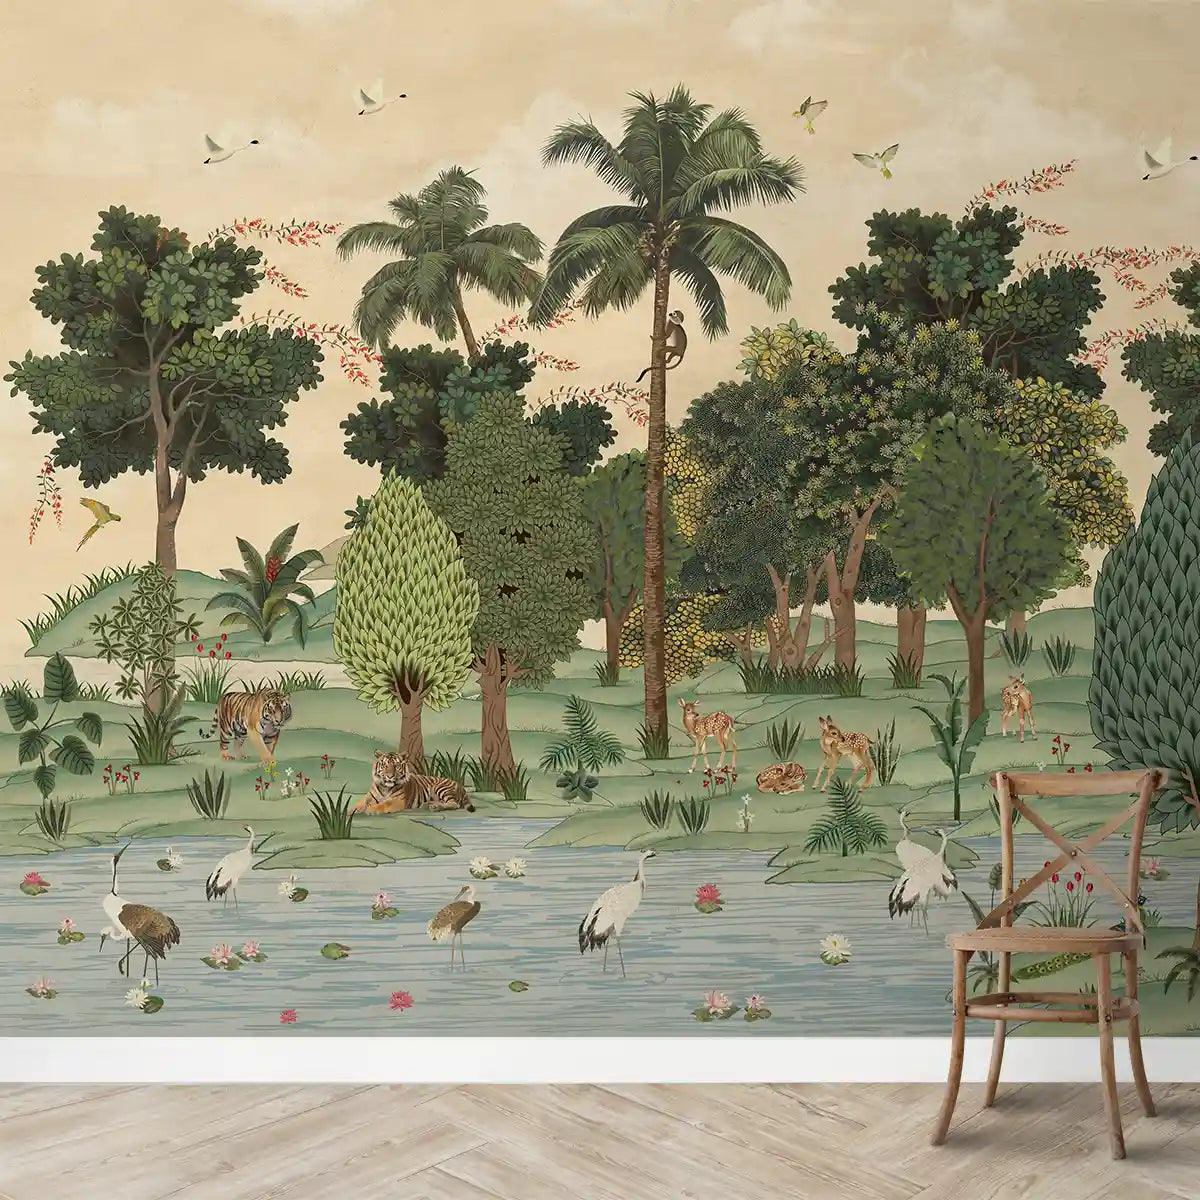 Ran Shringar Wallpaper Depicting Ranthambore Forest Designed for Walls muddy creamish beige